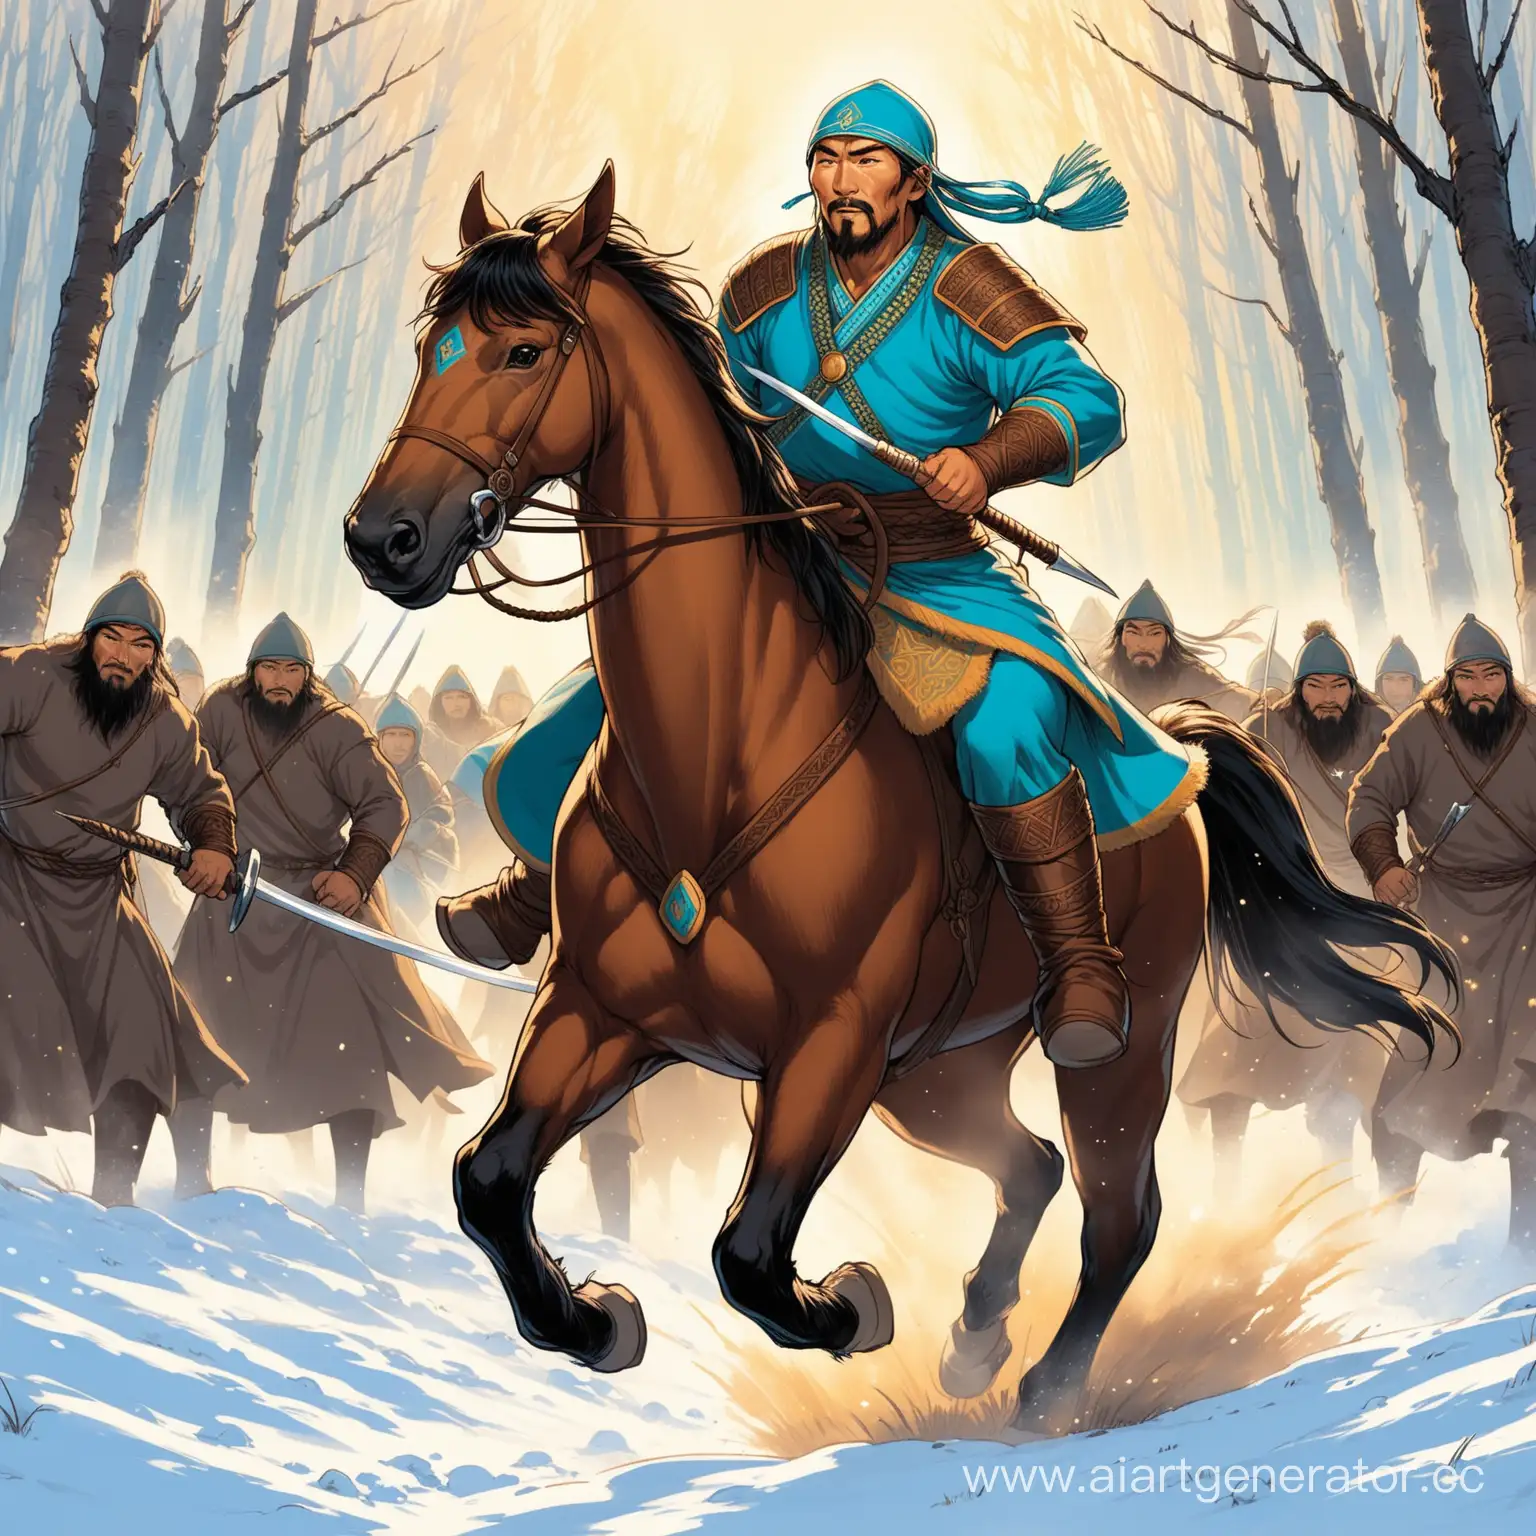 Legendary-Kazakh-Warrior-Ertostik-Fights-Bandits-in-the-Steppes